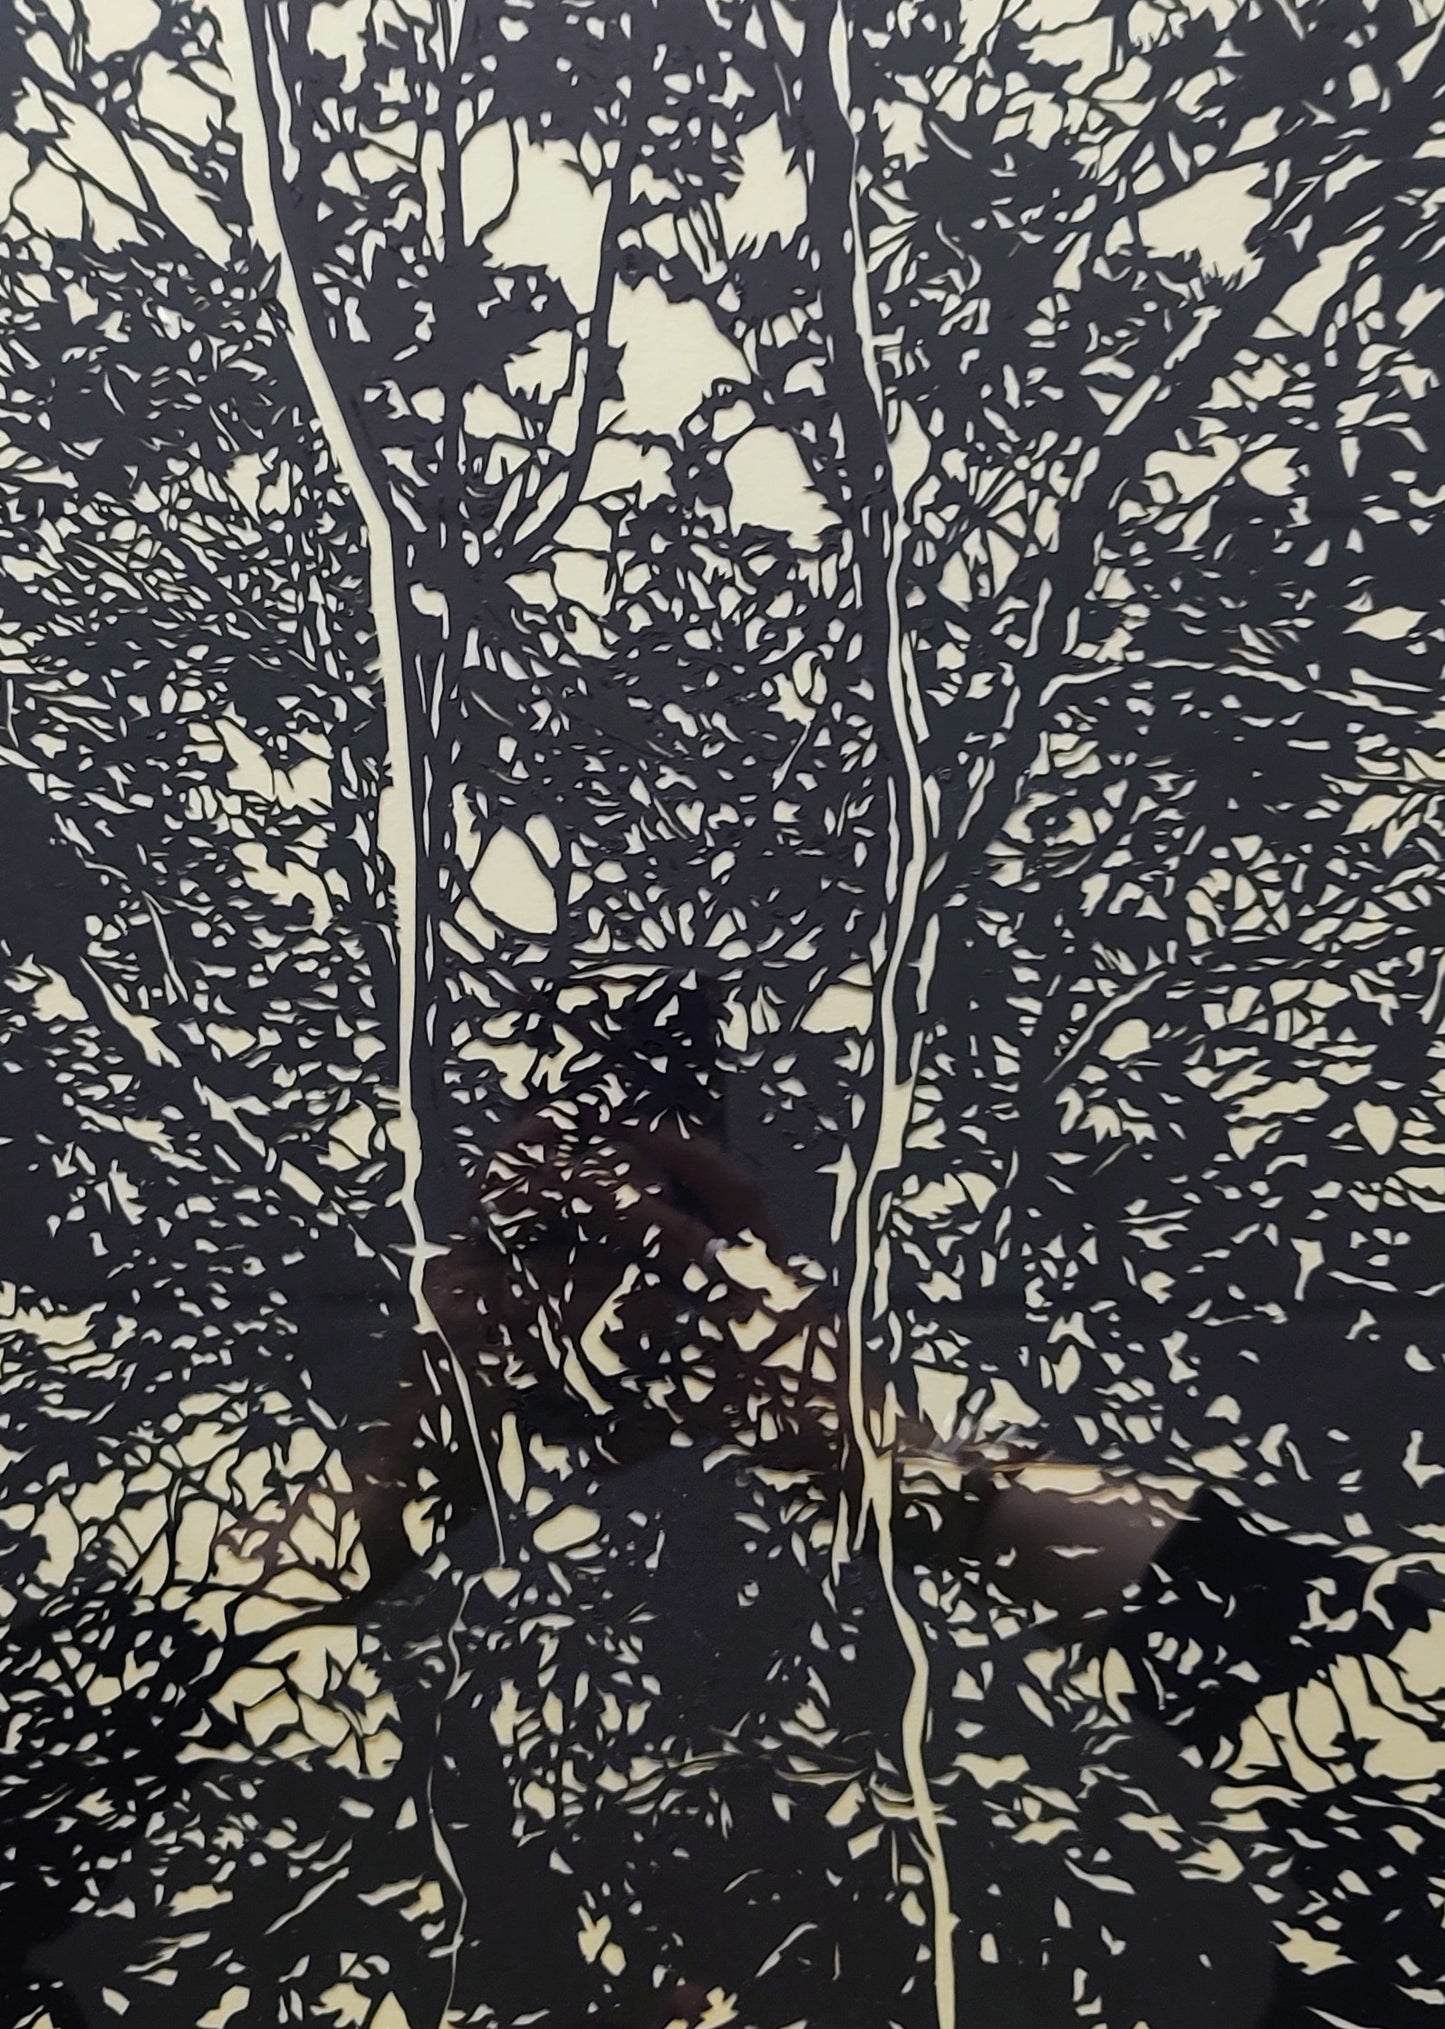 Mark Curtis Hughes- Through the Trees, Original Framed Papercut